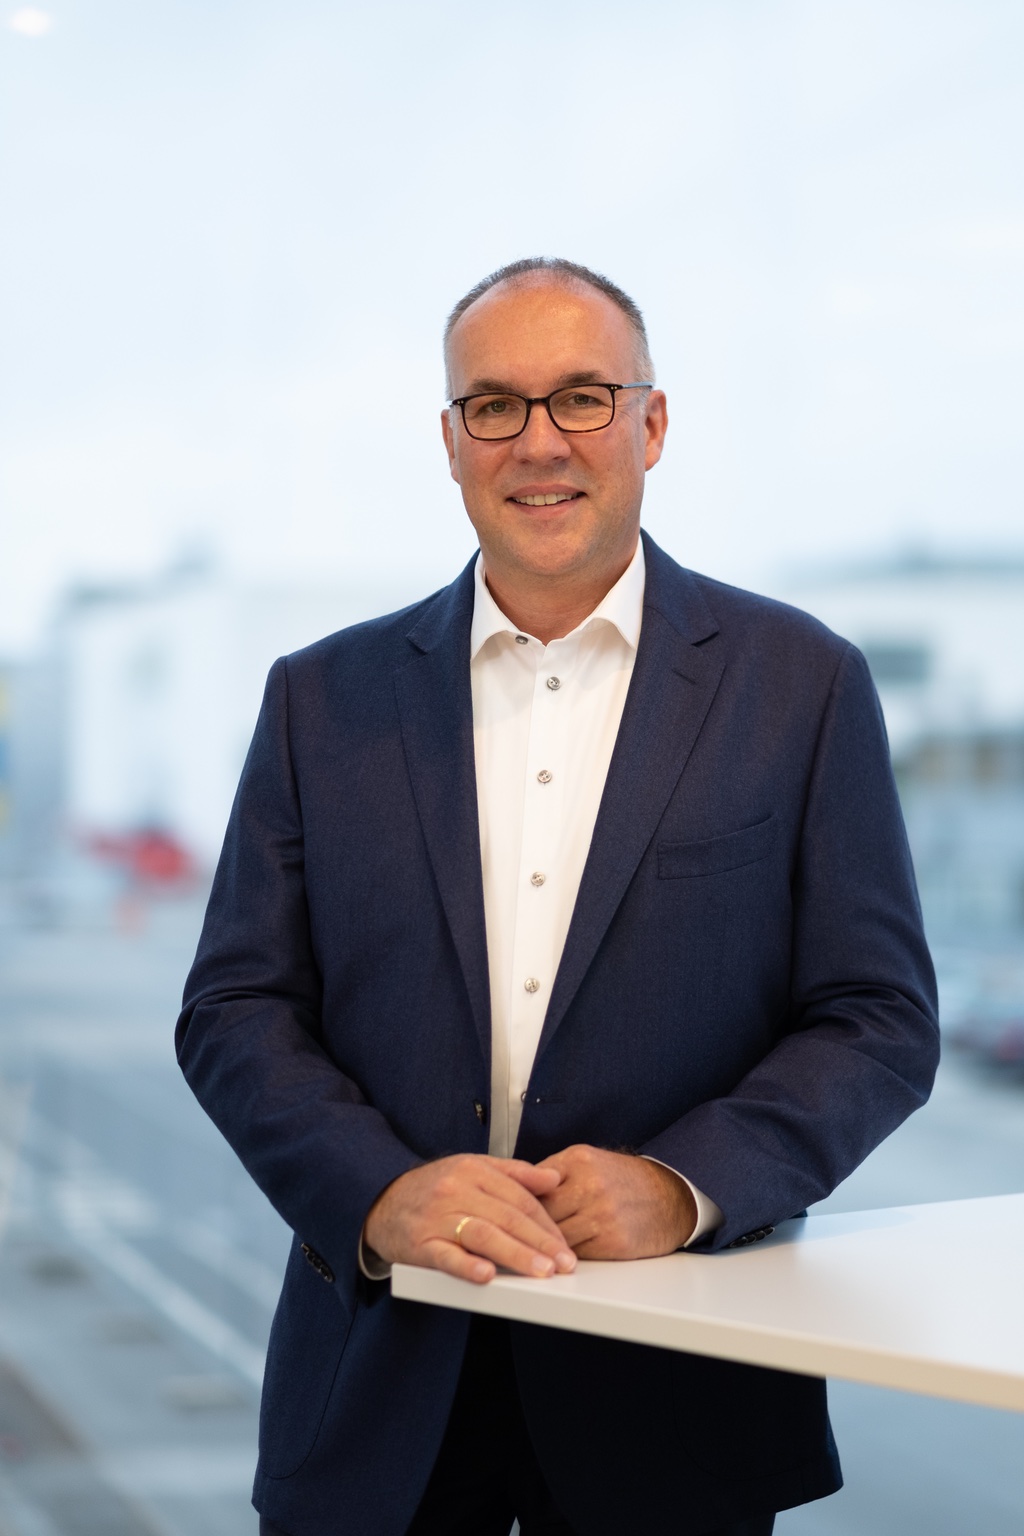 Arno Gärtner, CEO of Karl Mayer Group. © Lenzing